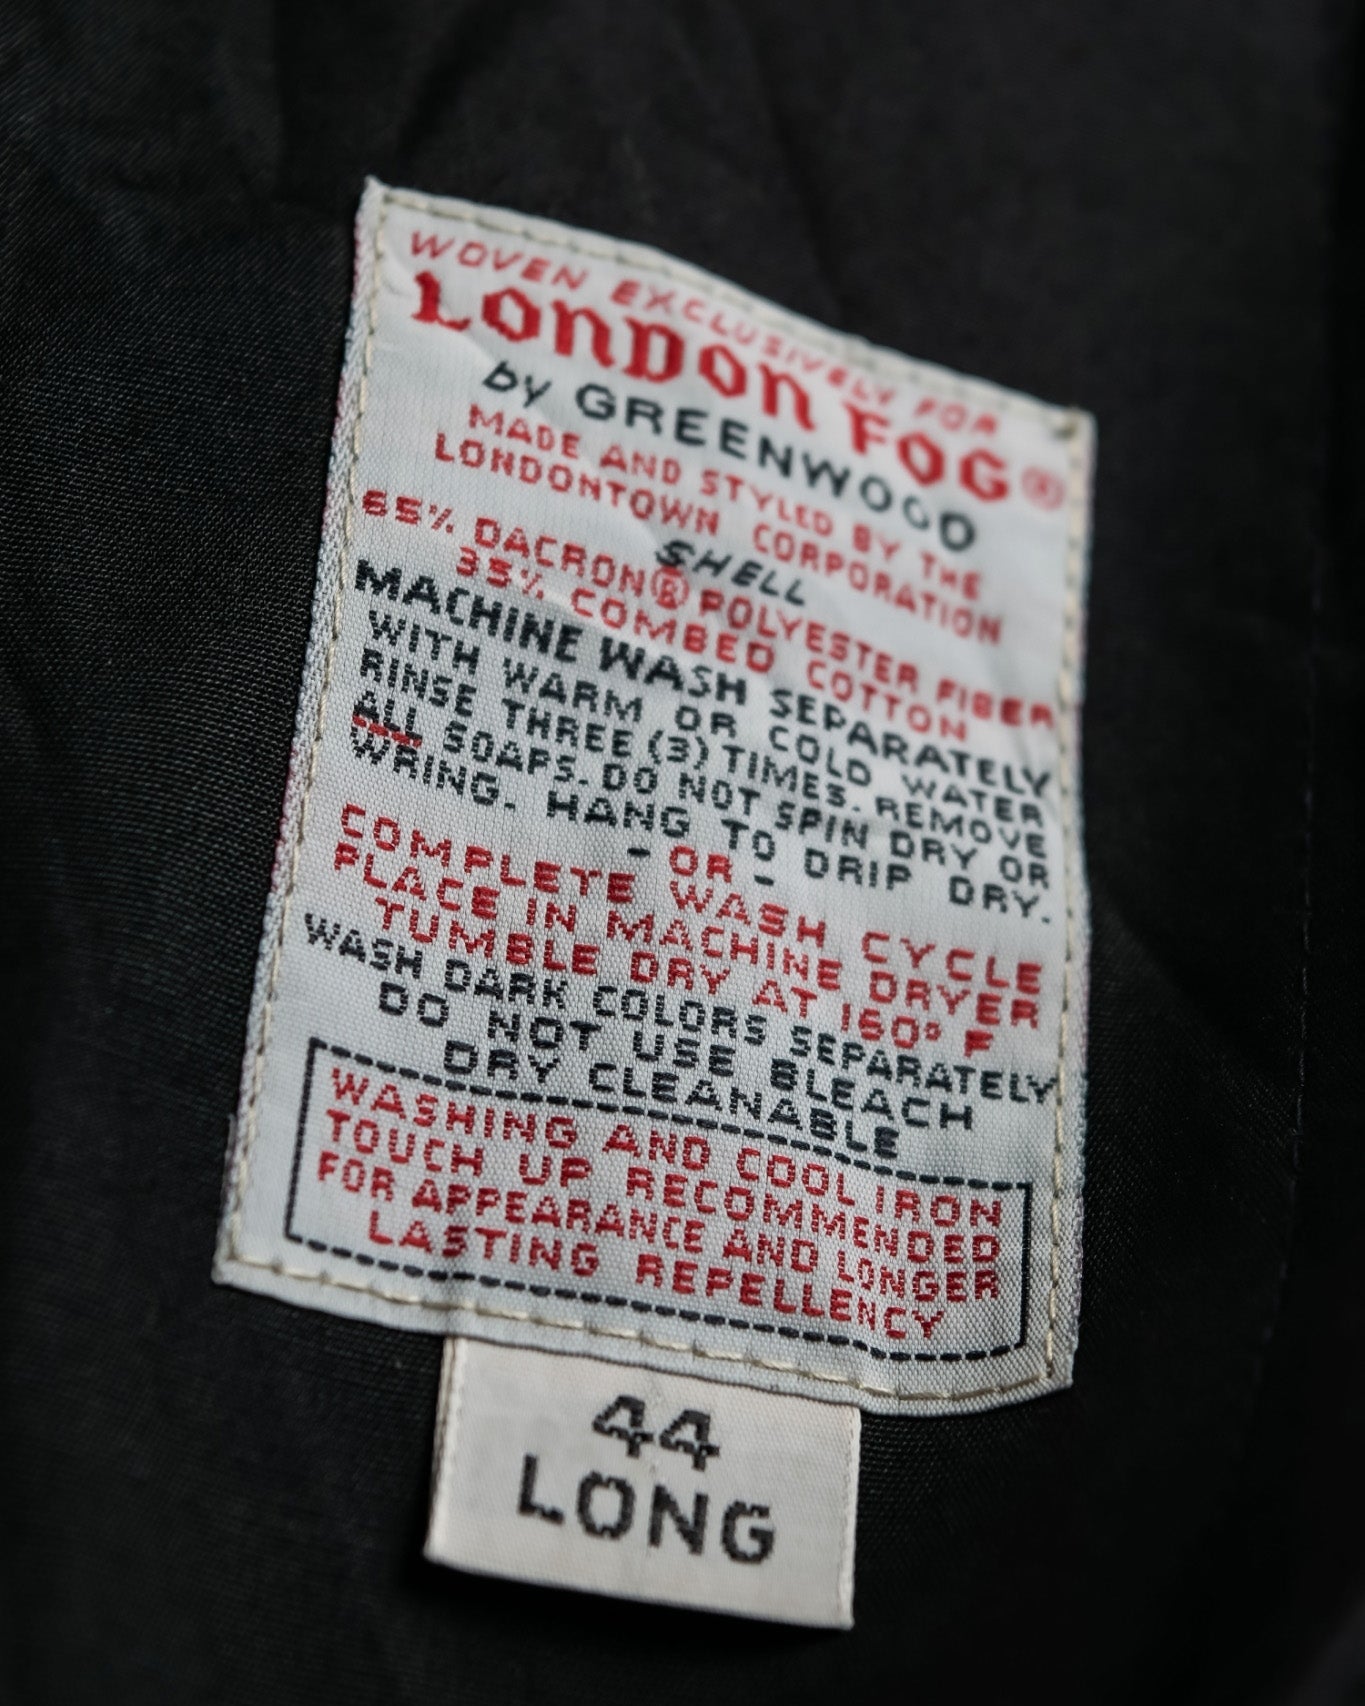 "LONDON FOG" Vintage Black Coat